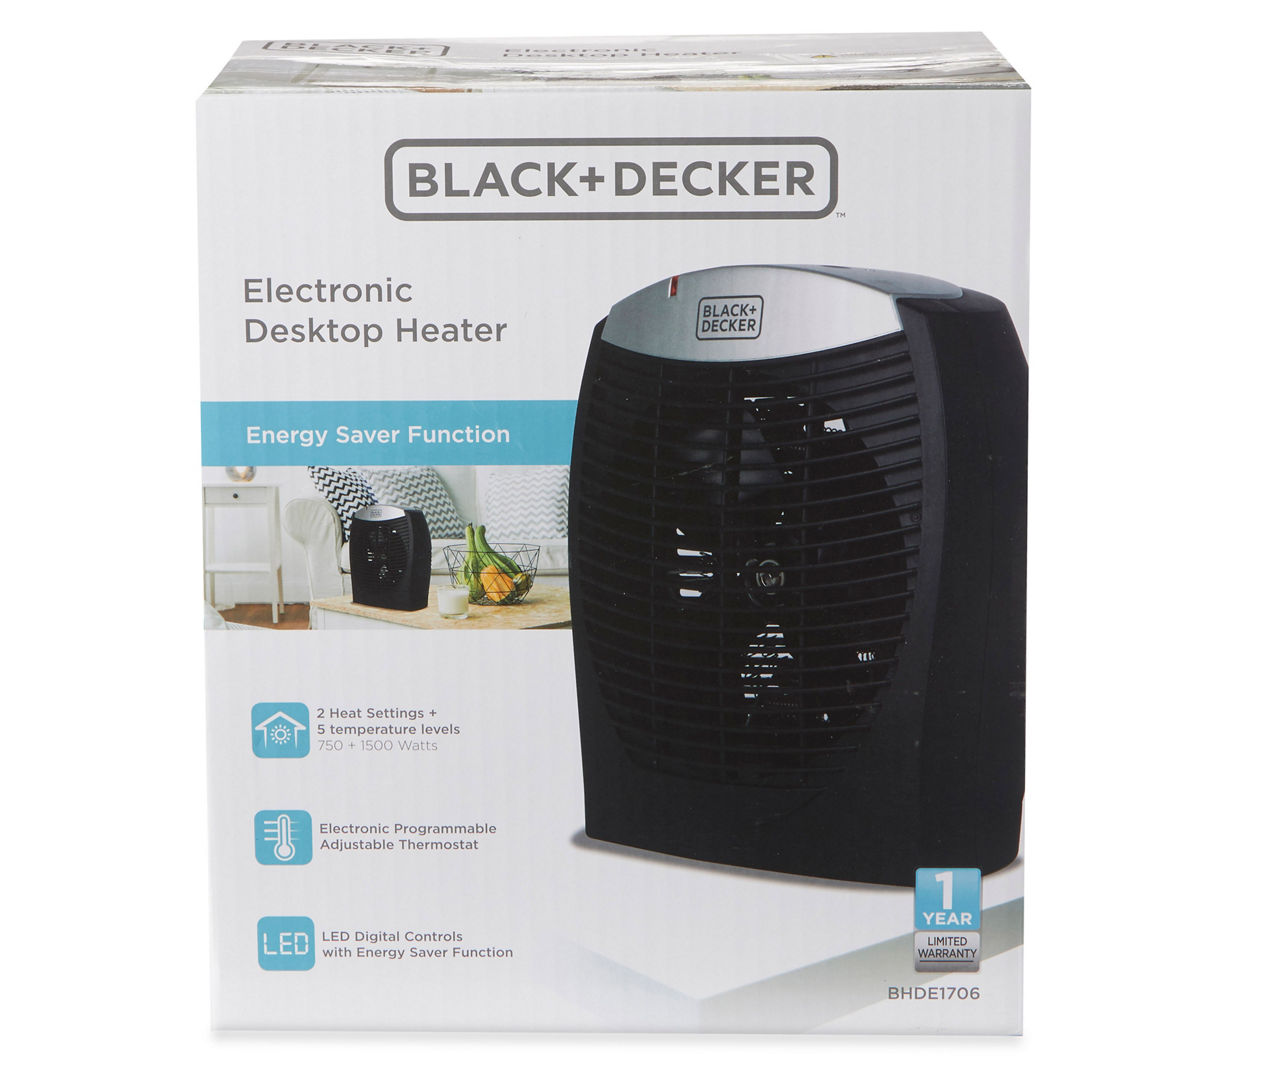  BLACK+DECKER Space Heater, for Office Desk, Home